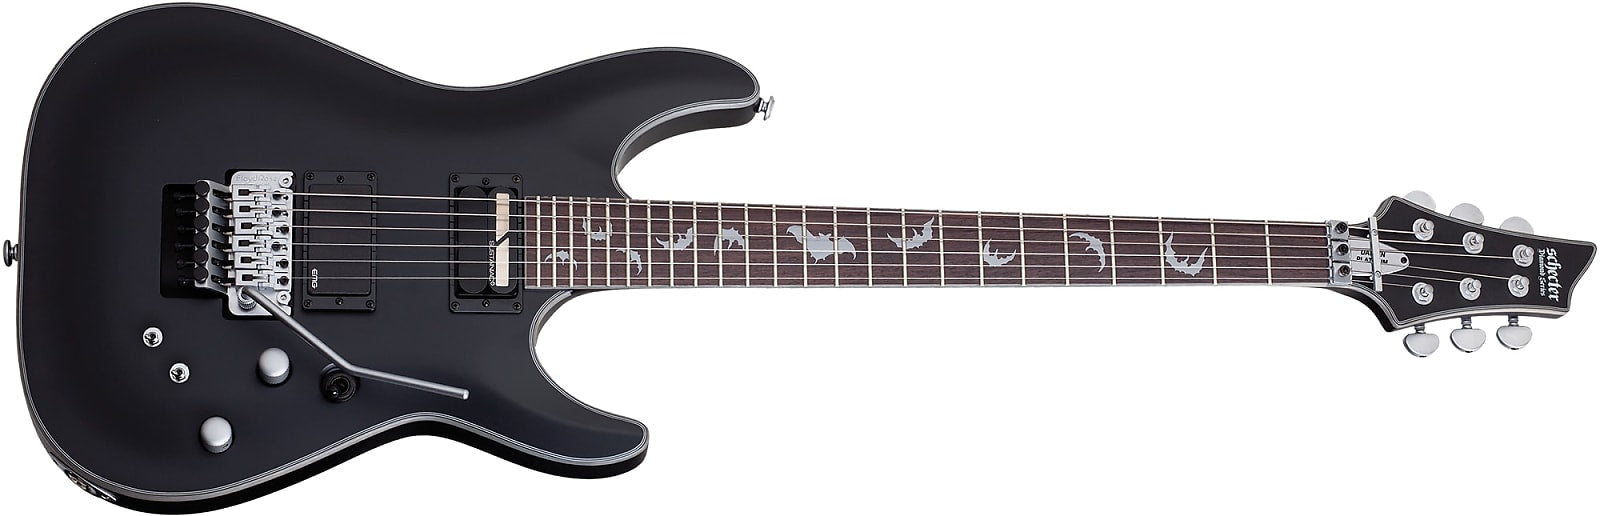 Schecter 1189 Damien Platinum-6 FR S Electric Guitar - Satin Black